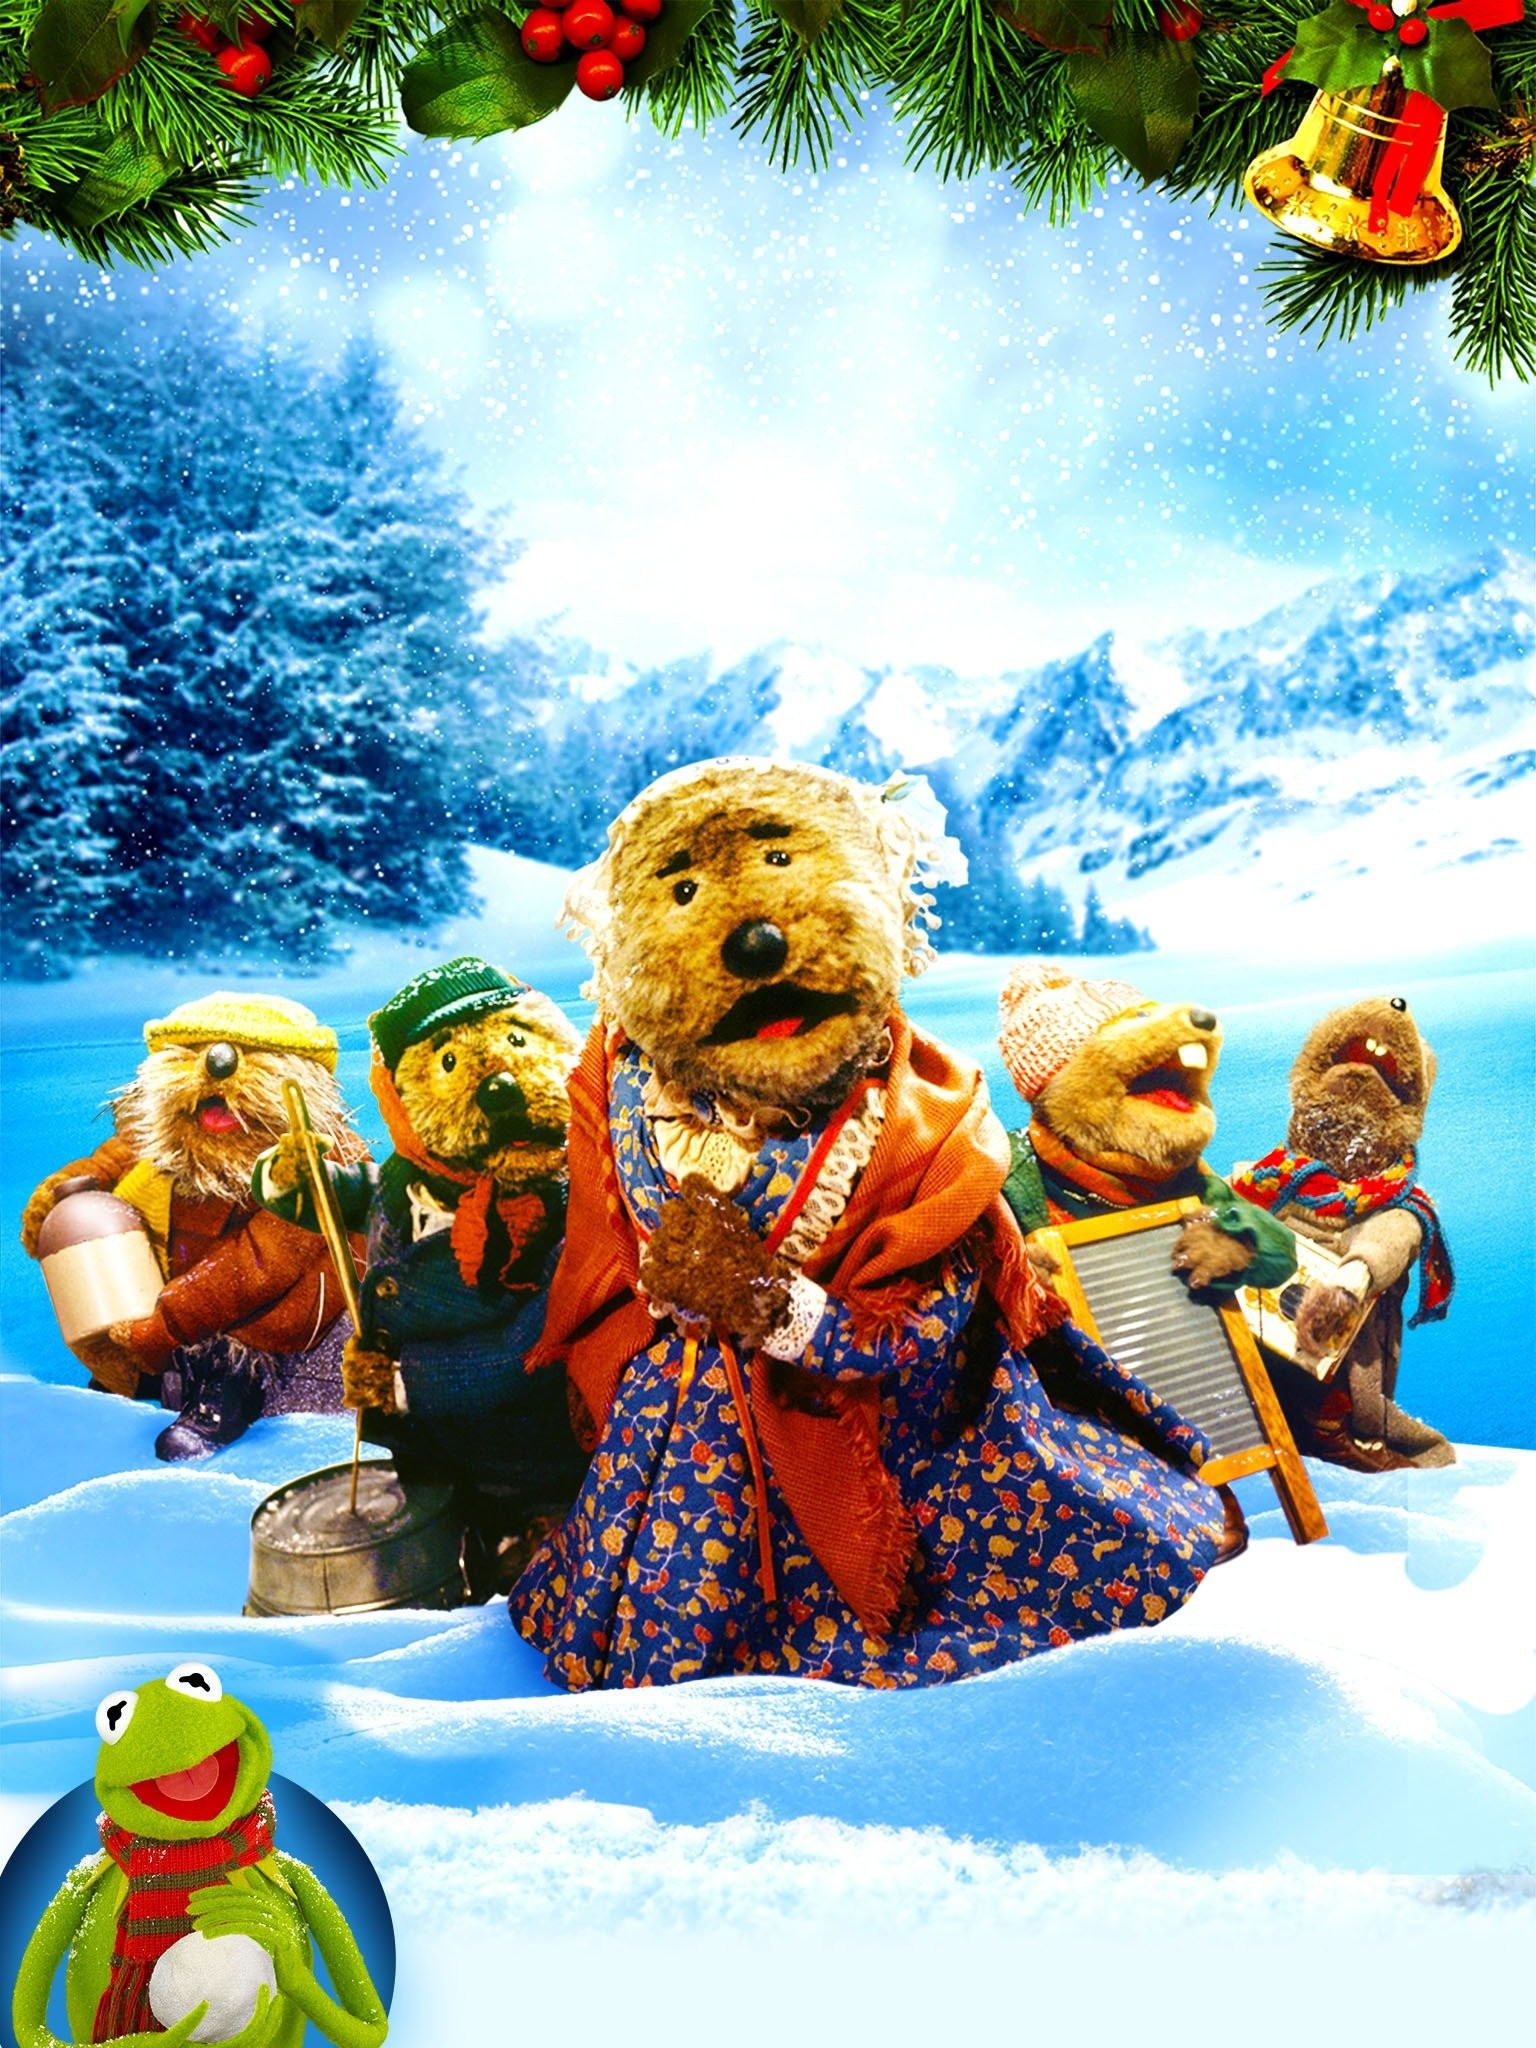 Emmet Otter's Jug-Band Christmas - Rotten Tomatoes